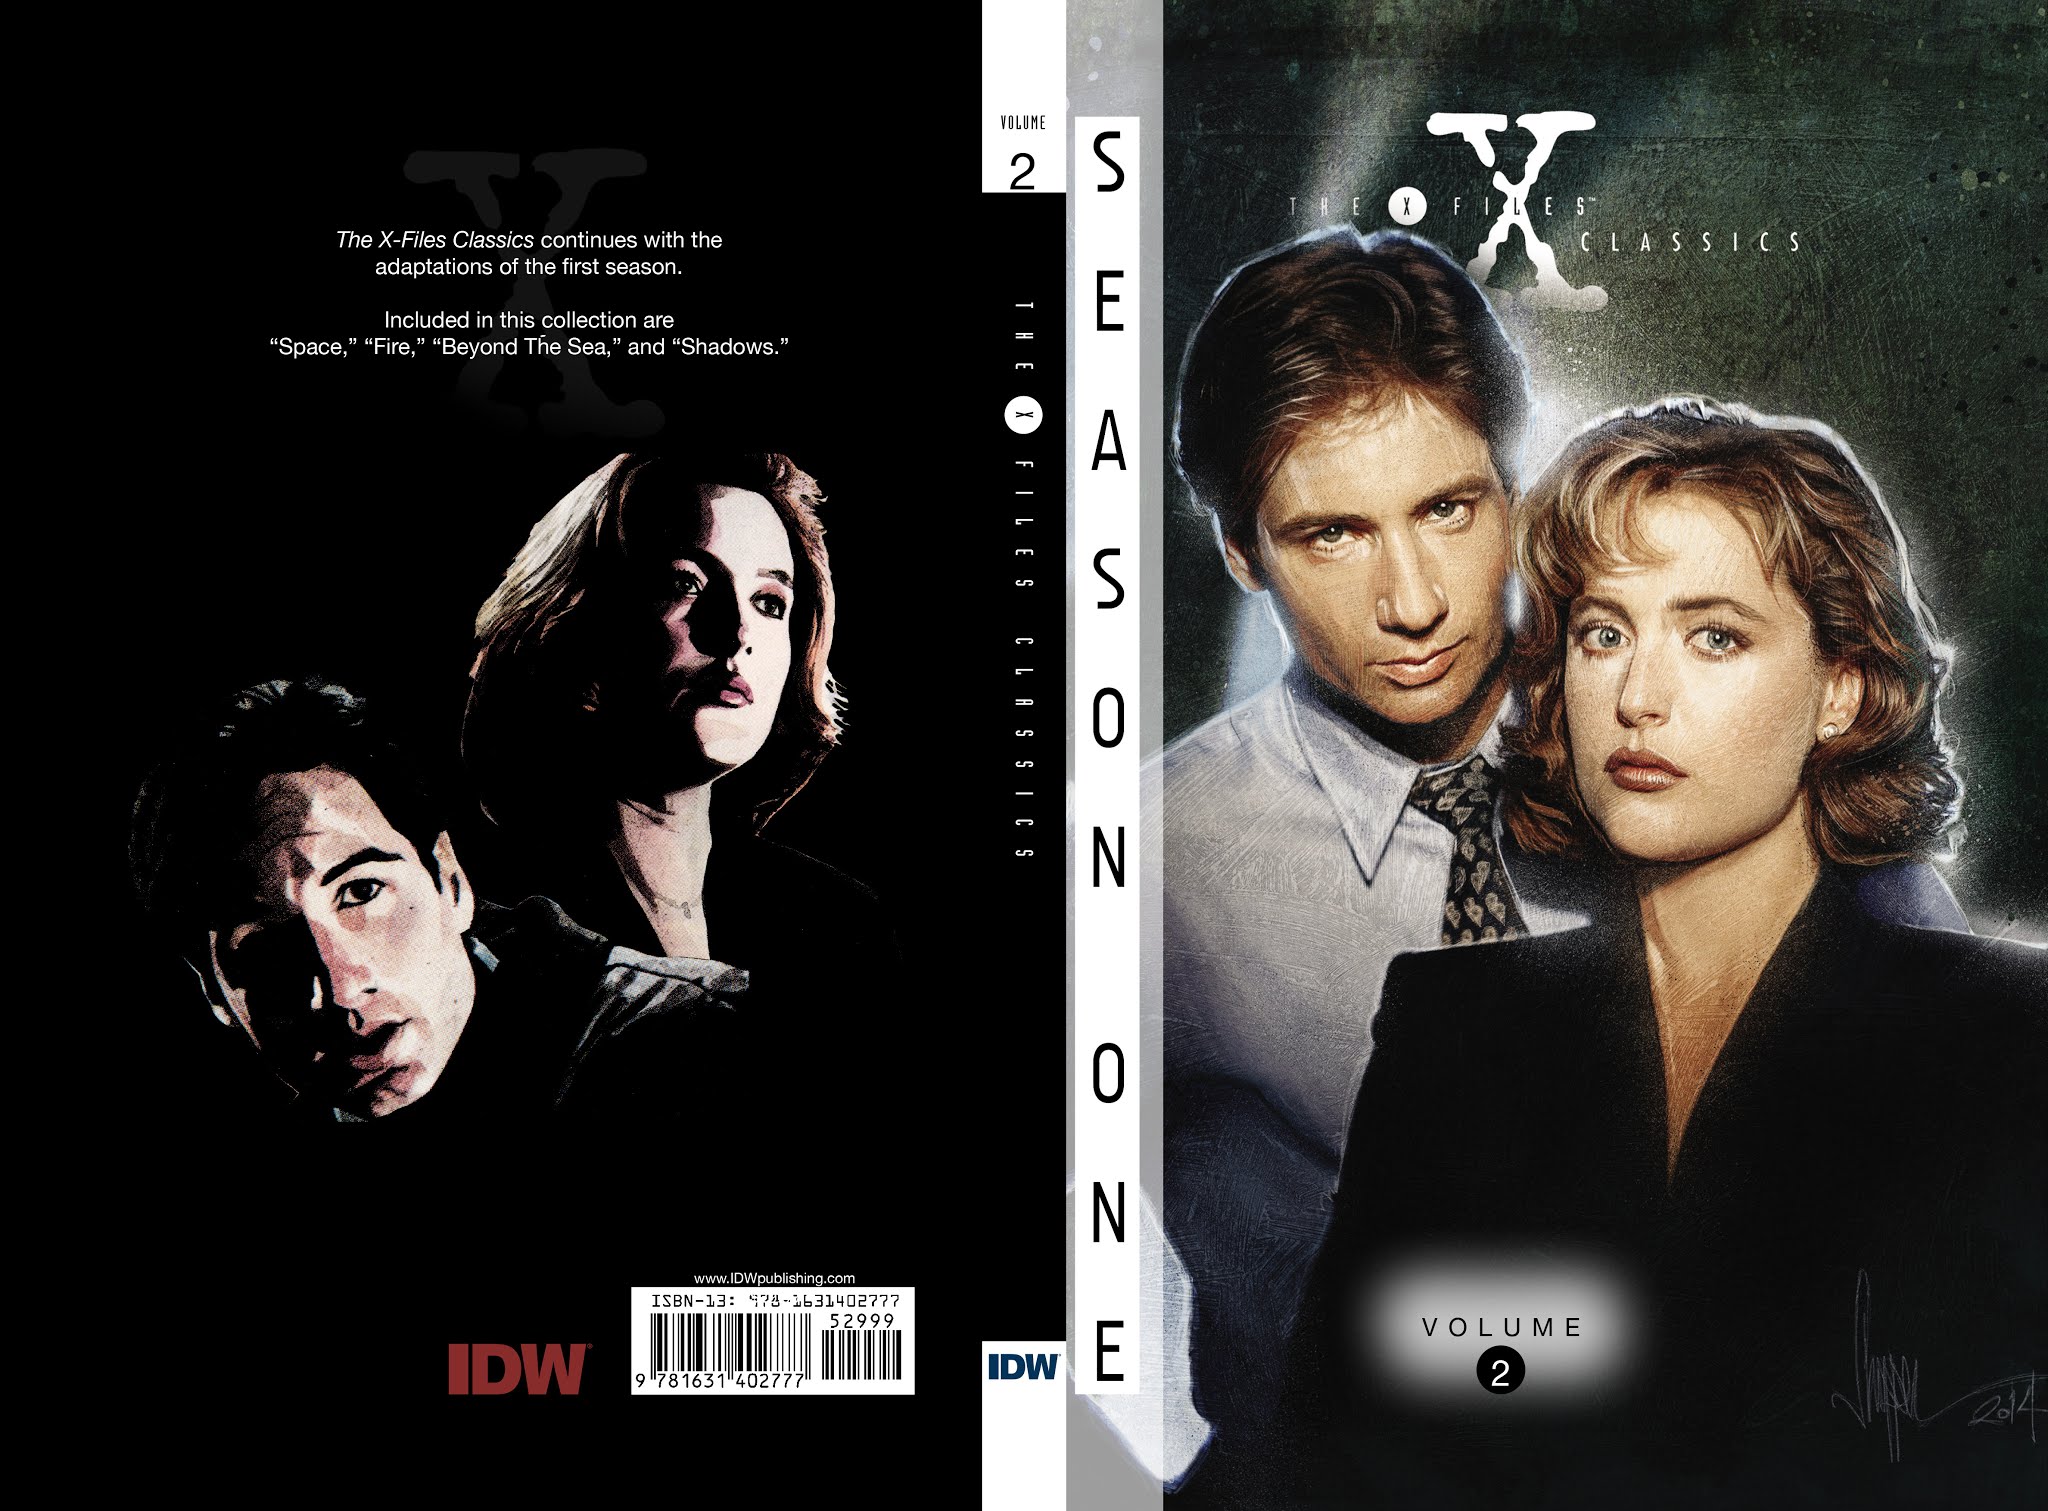 The x-files постеры 1990. X files тетрадь. X-files аудиокассета. X files Drive. Секретные материалы читать